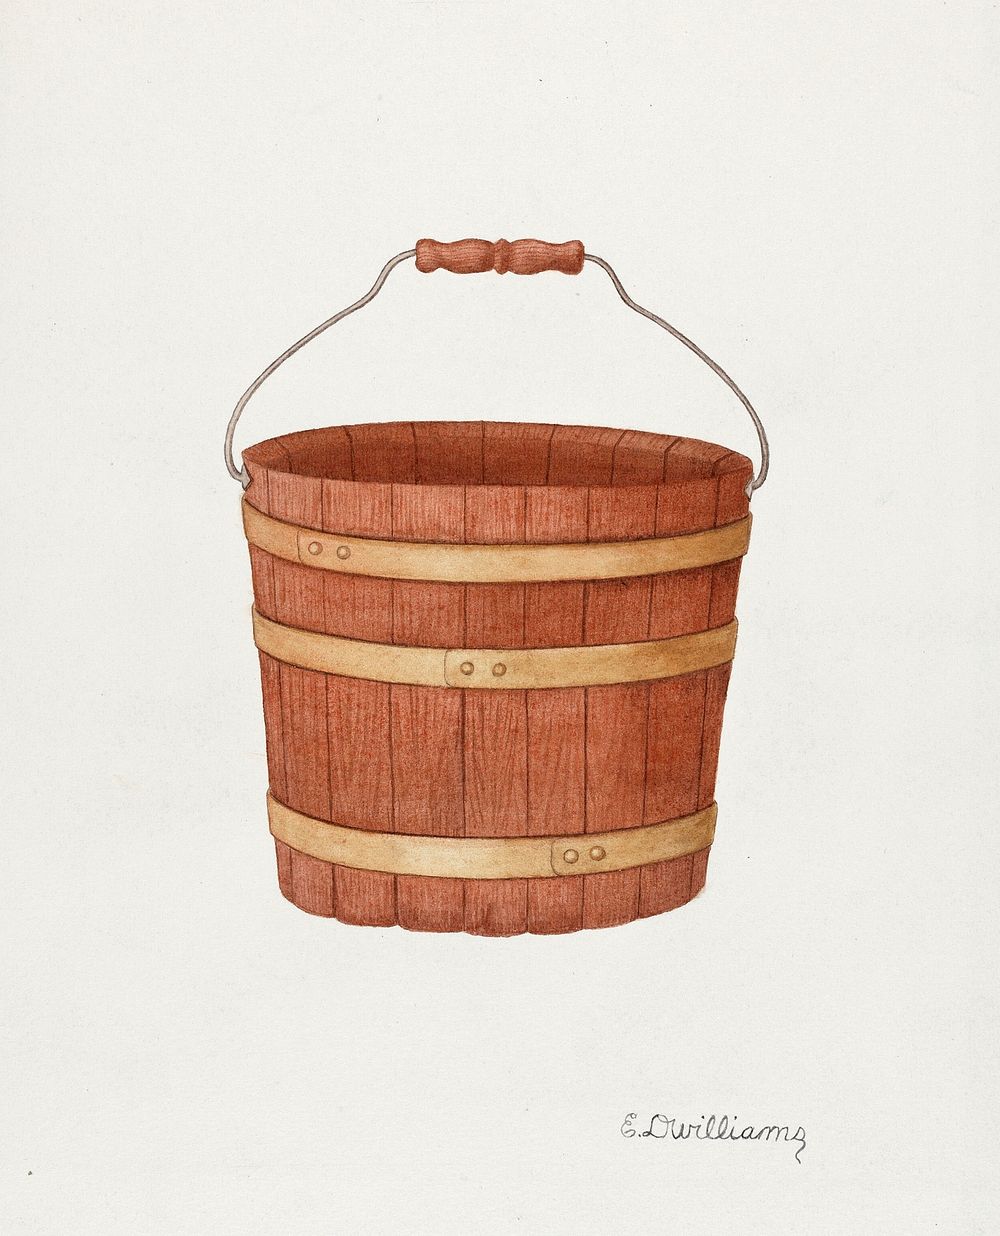 Shaker Cedar Basket (1935&ndash;1942) by Edward D. Williams. Original from The National Gallery of Art. Digitally enhanced…